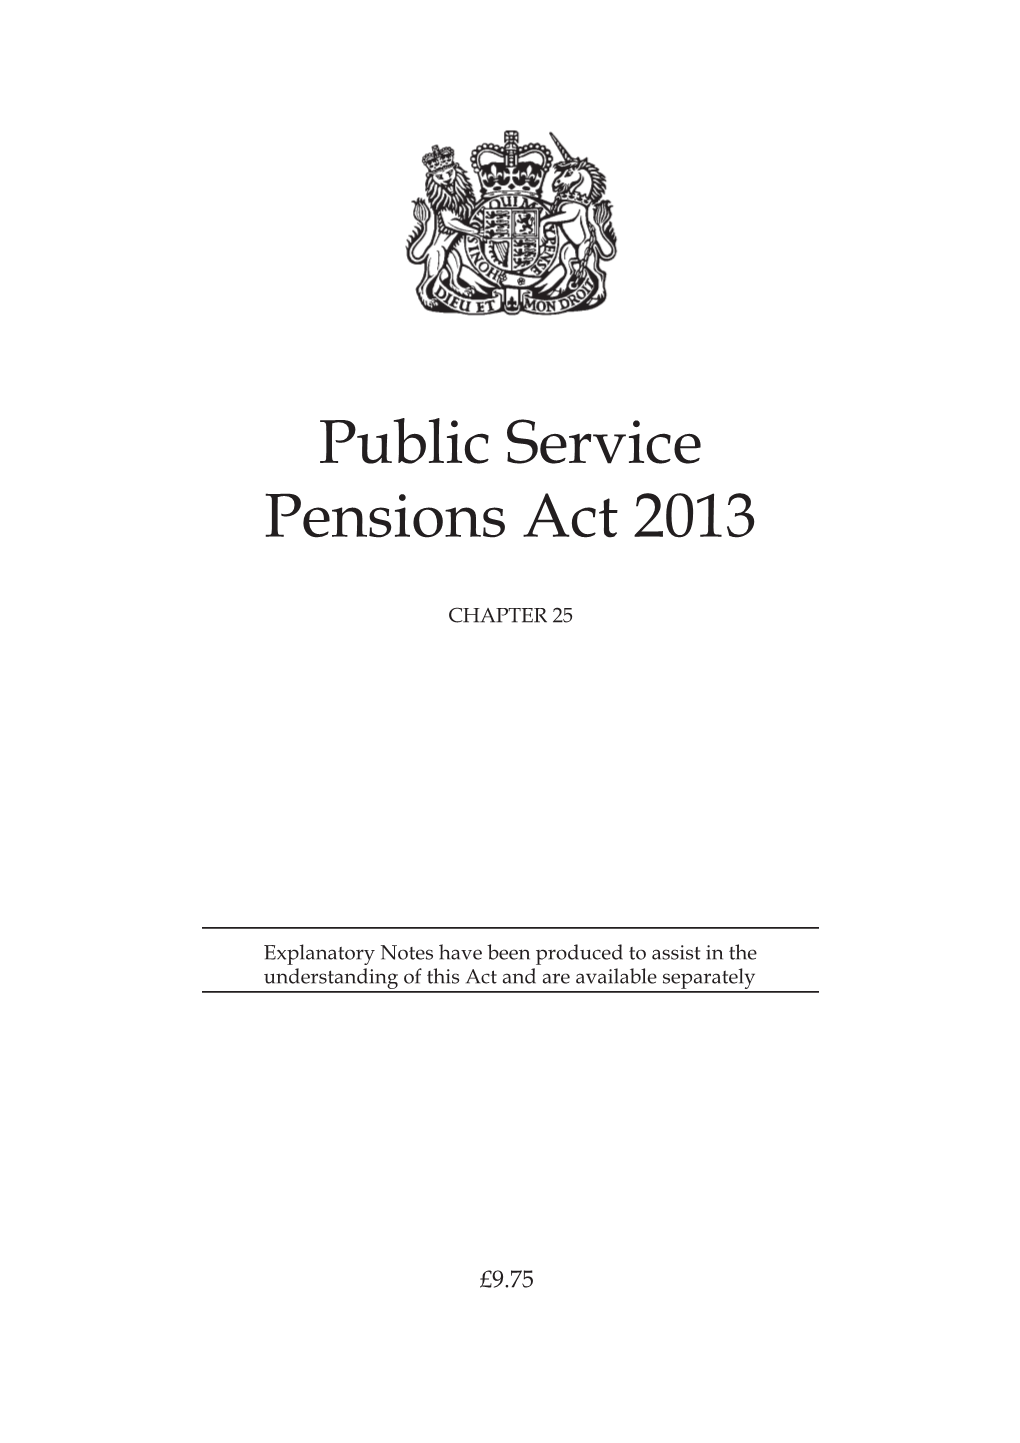 Public Service Pensions Act 2013